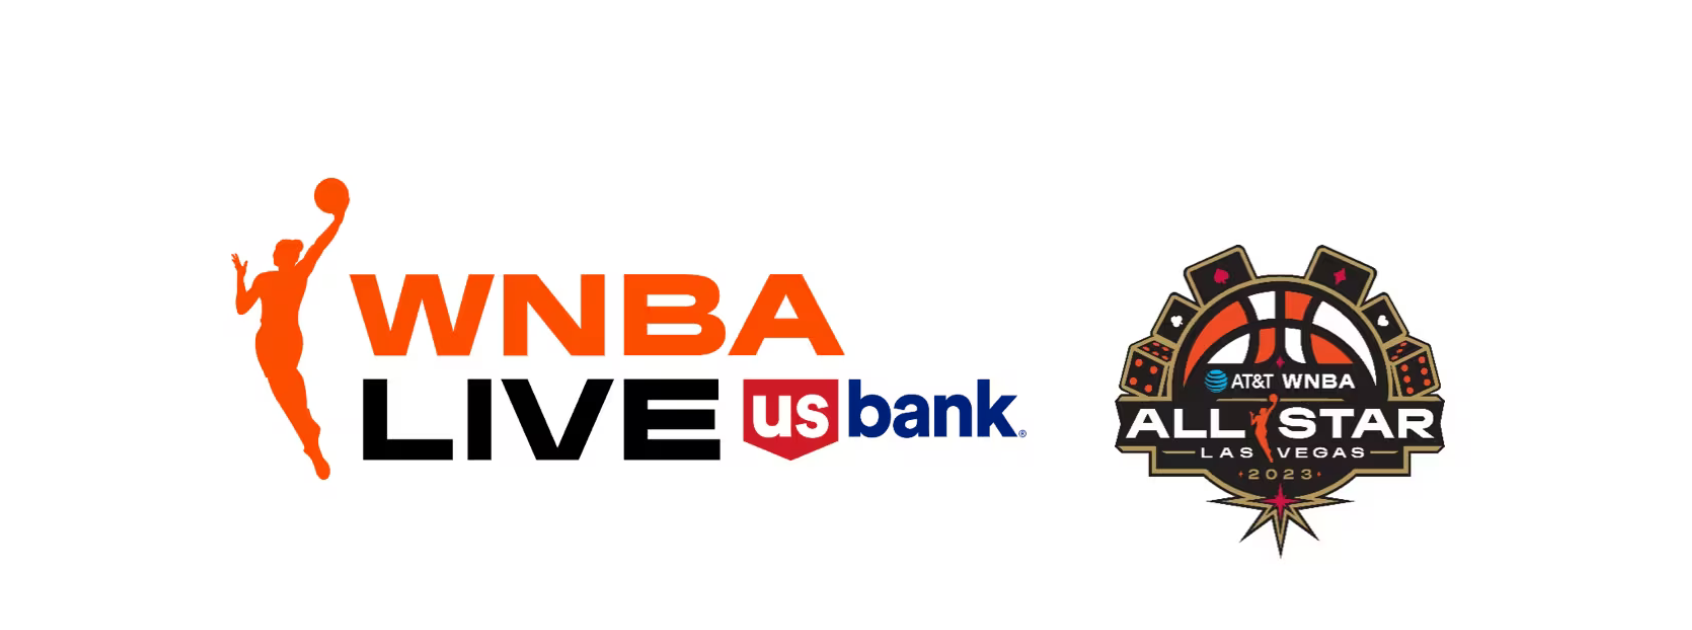 WNBA Live Presented by U.S